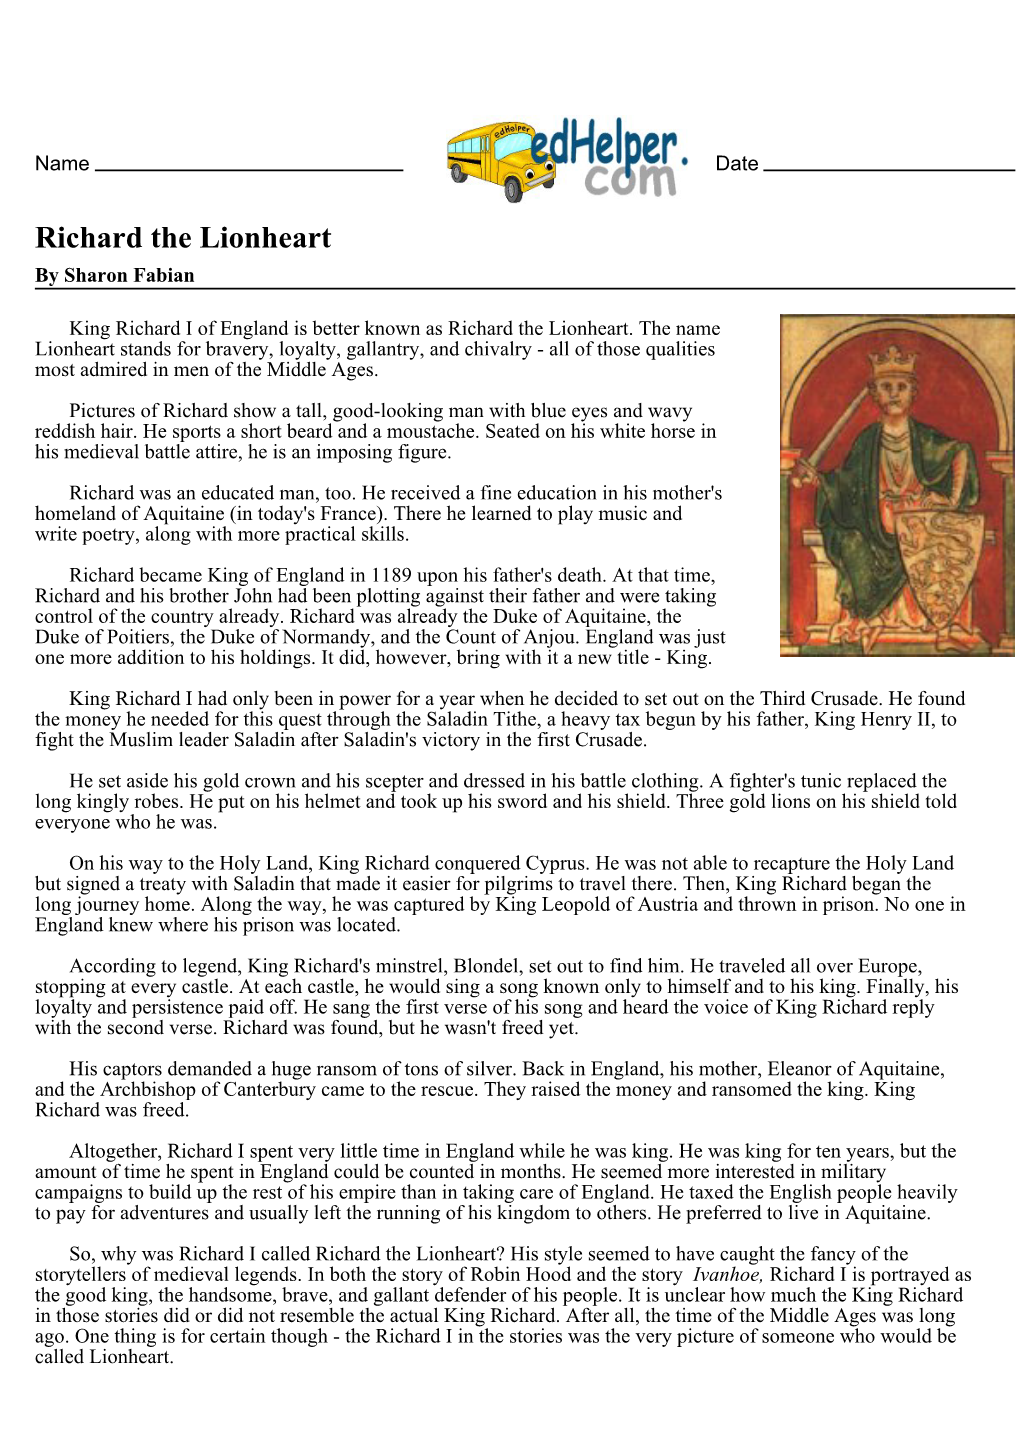 Richard the Lionheart by Sharon Fabian